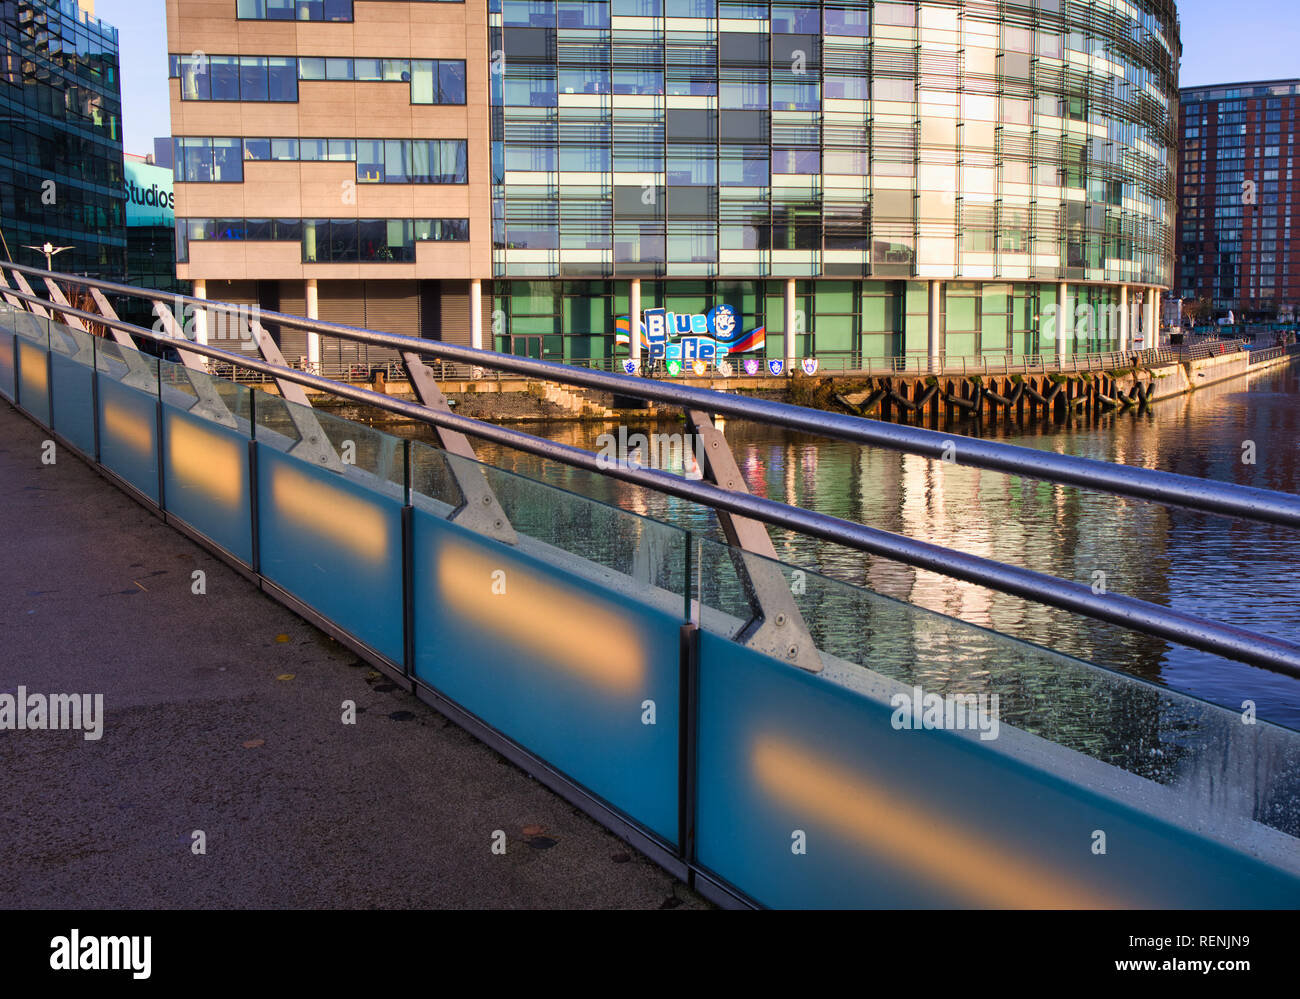 Media City Fußgängerbrücke über den Manchester Ship Canal und Bridge House, wo Blue Peter produziert wird, Salford, Greater Manchester, England Stockfoto